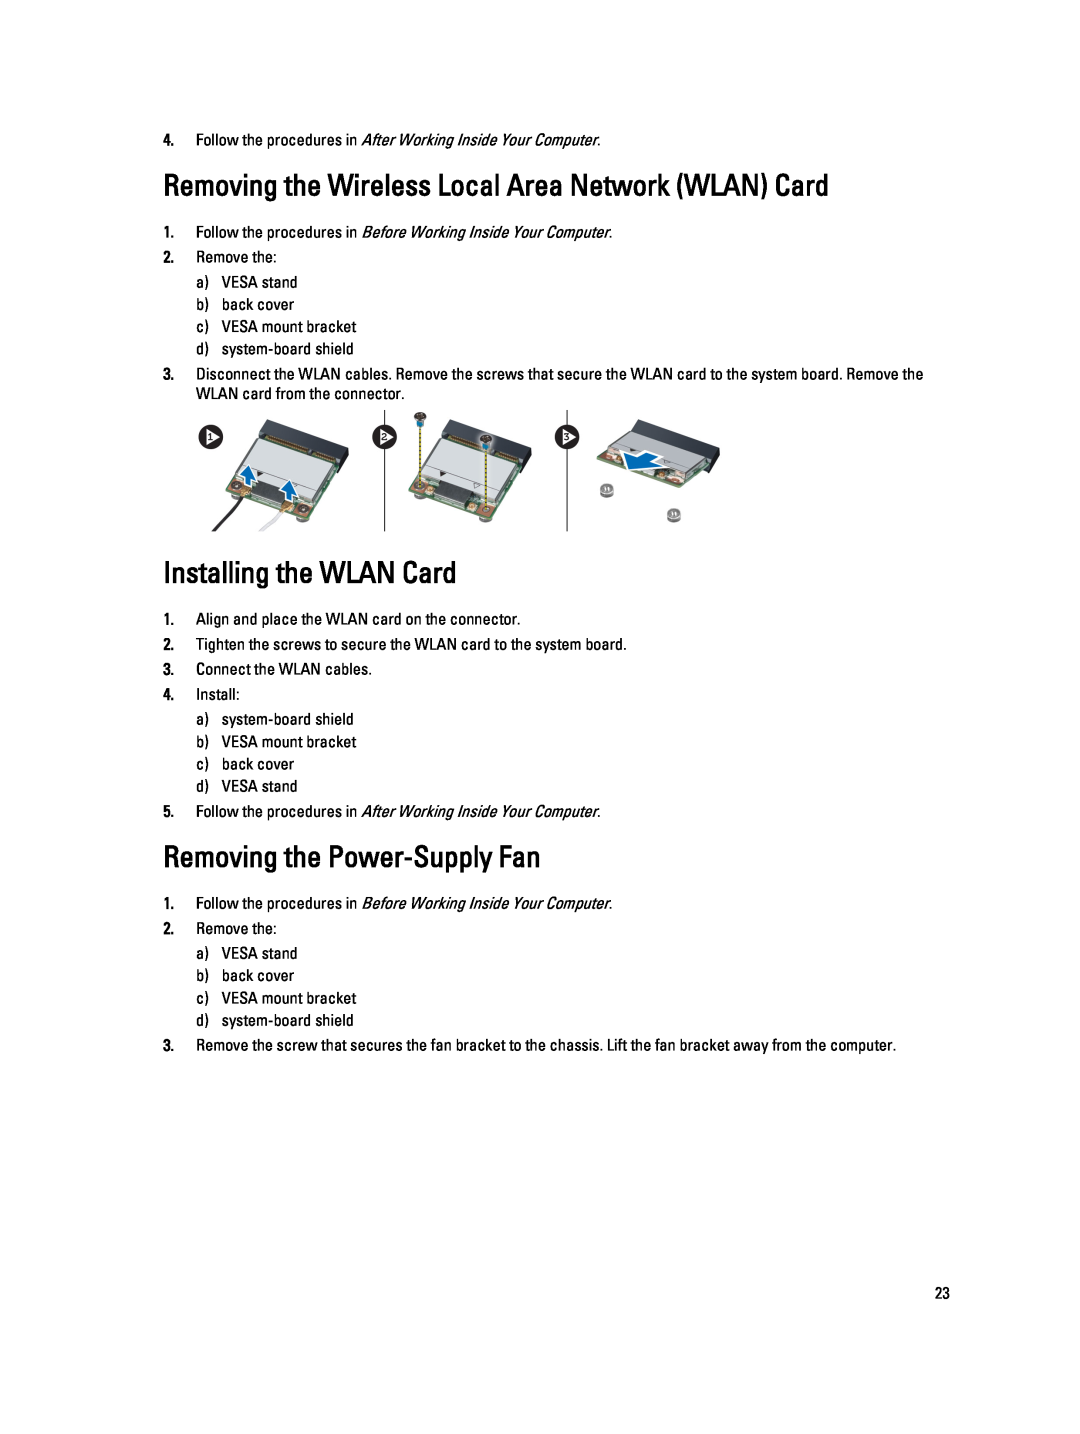 Dell 9010 Removing the Wireless Local Area Network WLAN Card, Installing the WLAN Card, Removing the Power-Supply Fan 